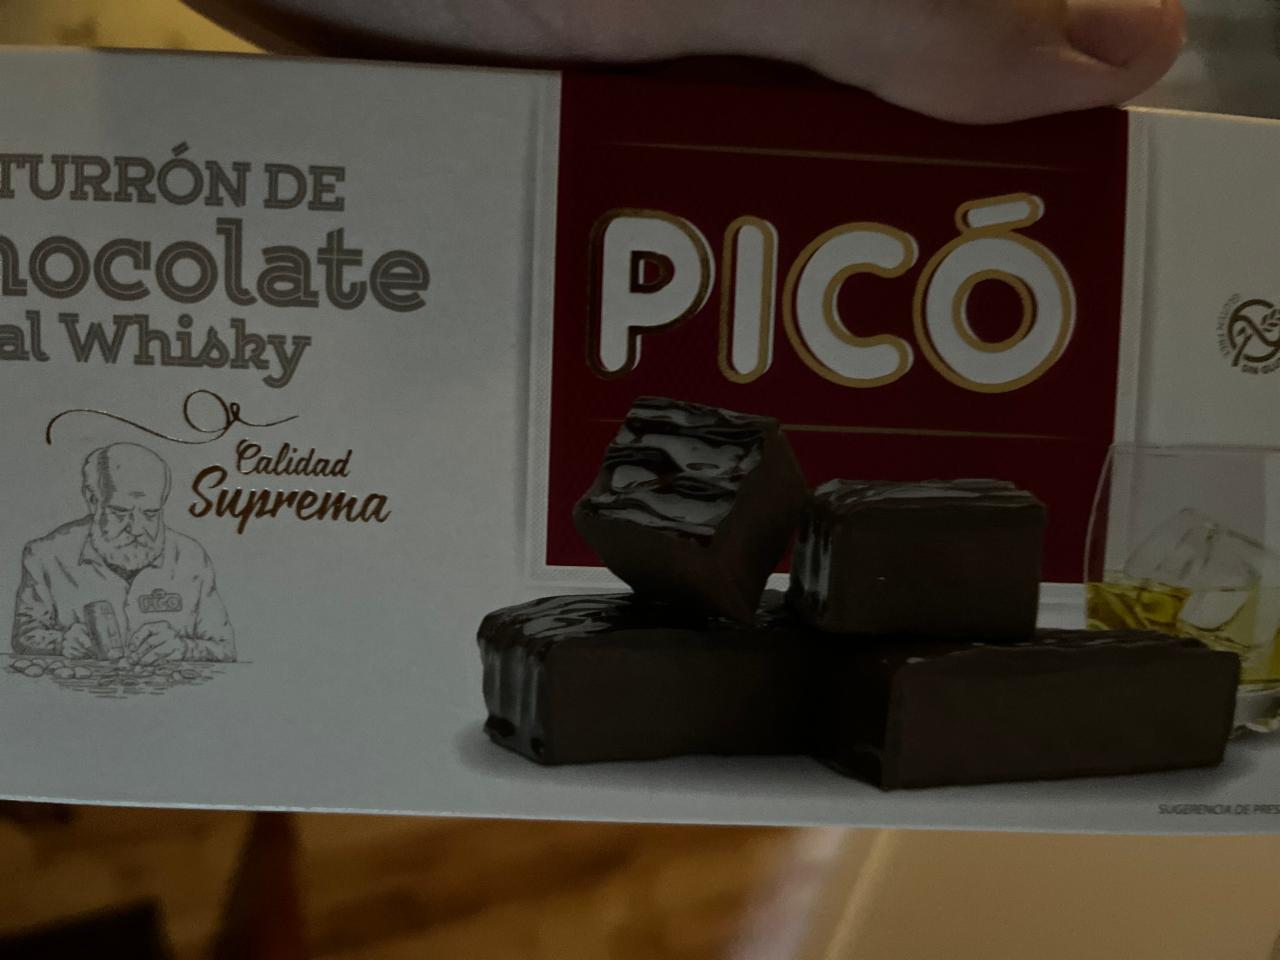 Фото - шоколад с виски Pico